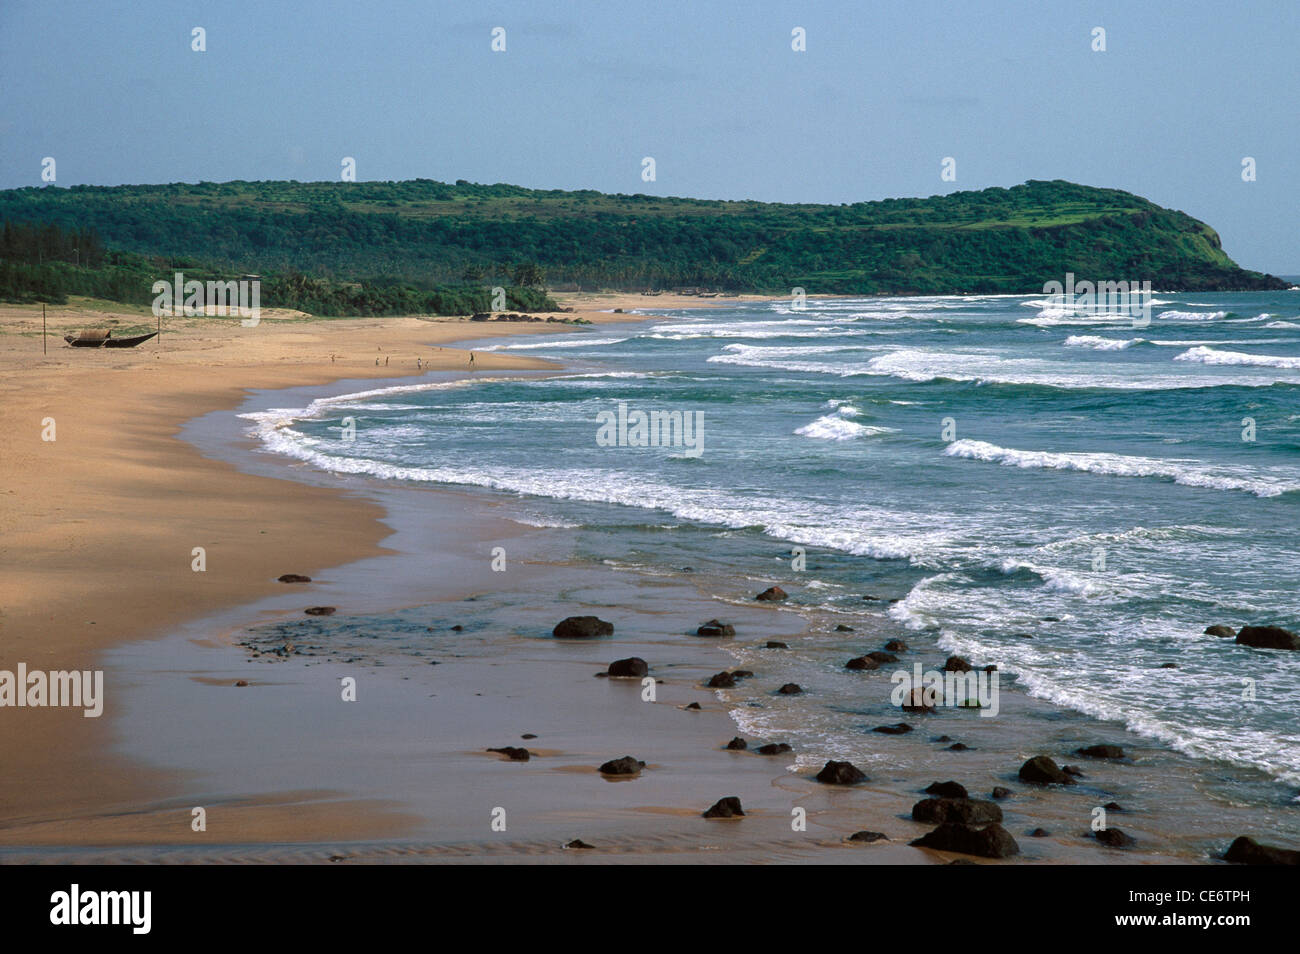 MBT 85993 : vuoto spiaggia mare surf sky pietre sabbia spiaggia kunkeshwar devgad maharashtra india Foto Stock